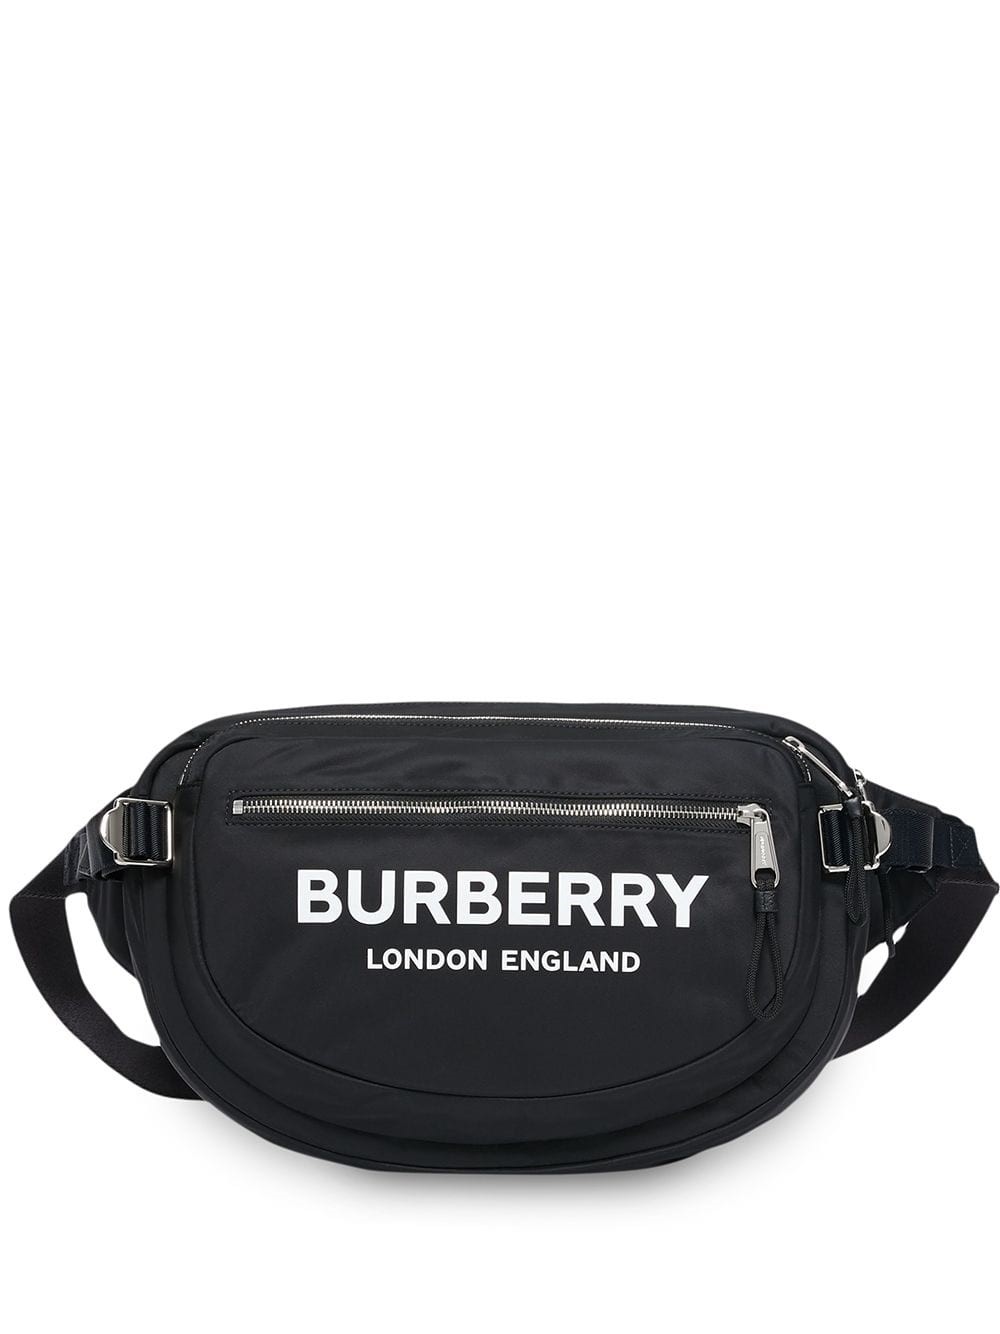 burberry london england bag